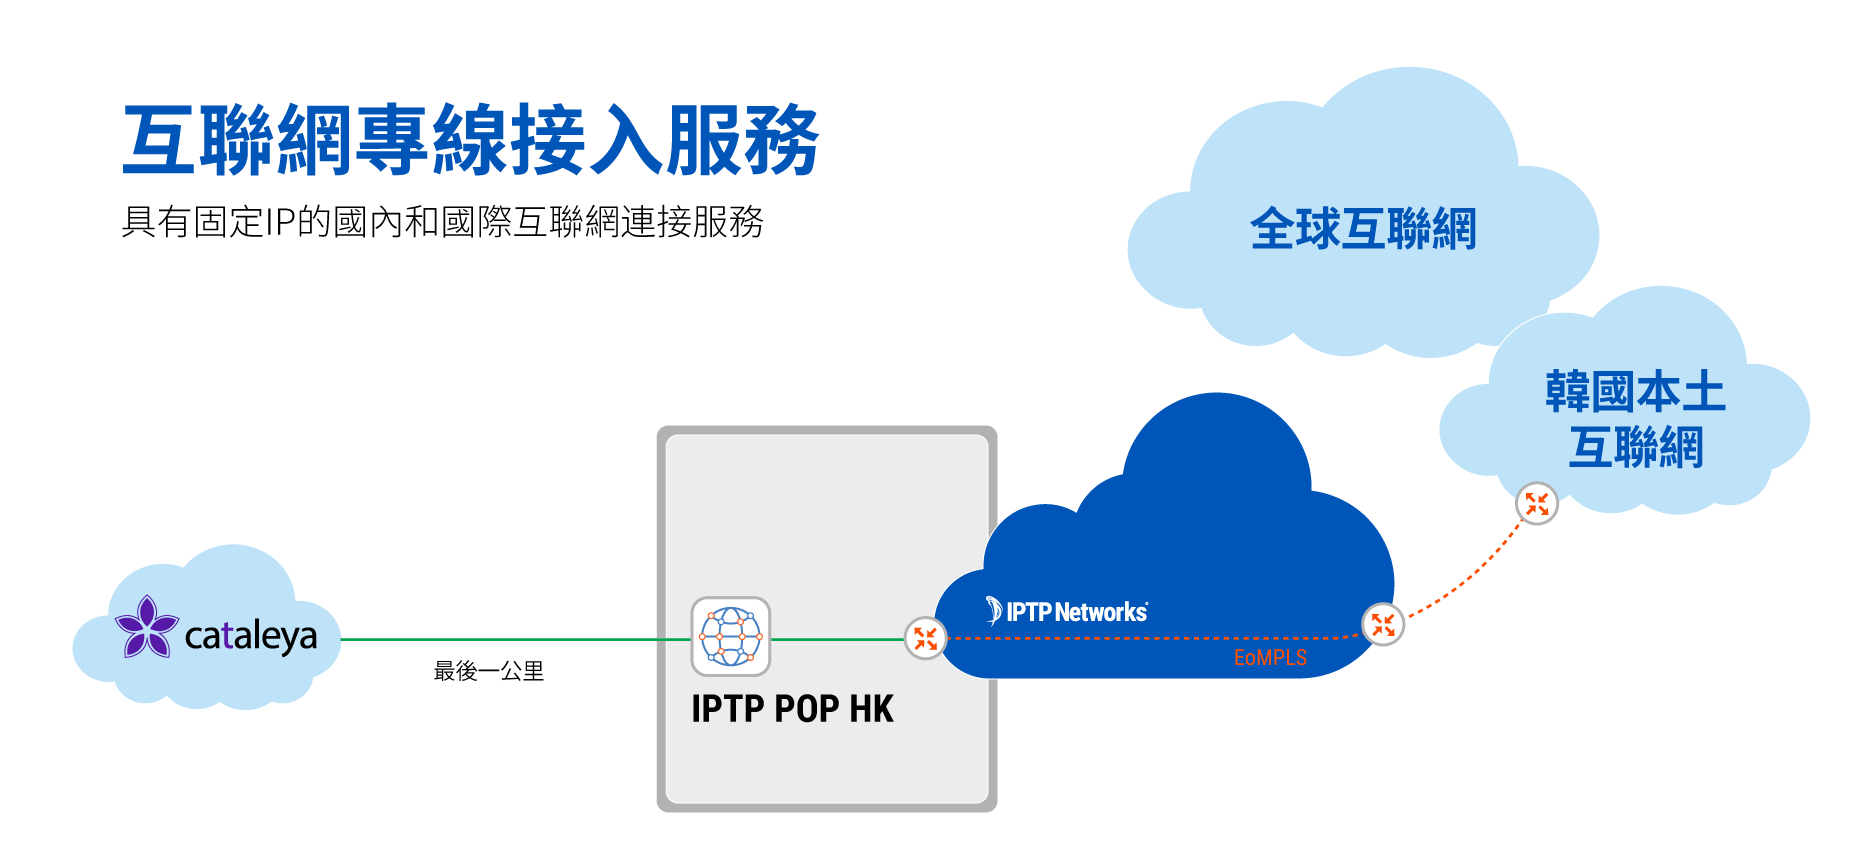 access-korea-internet-from-hongkong-via-remote-dia